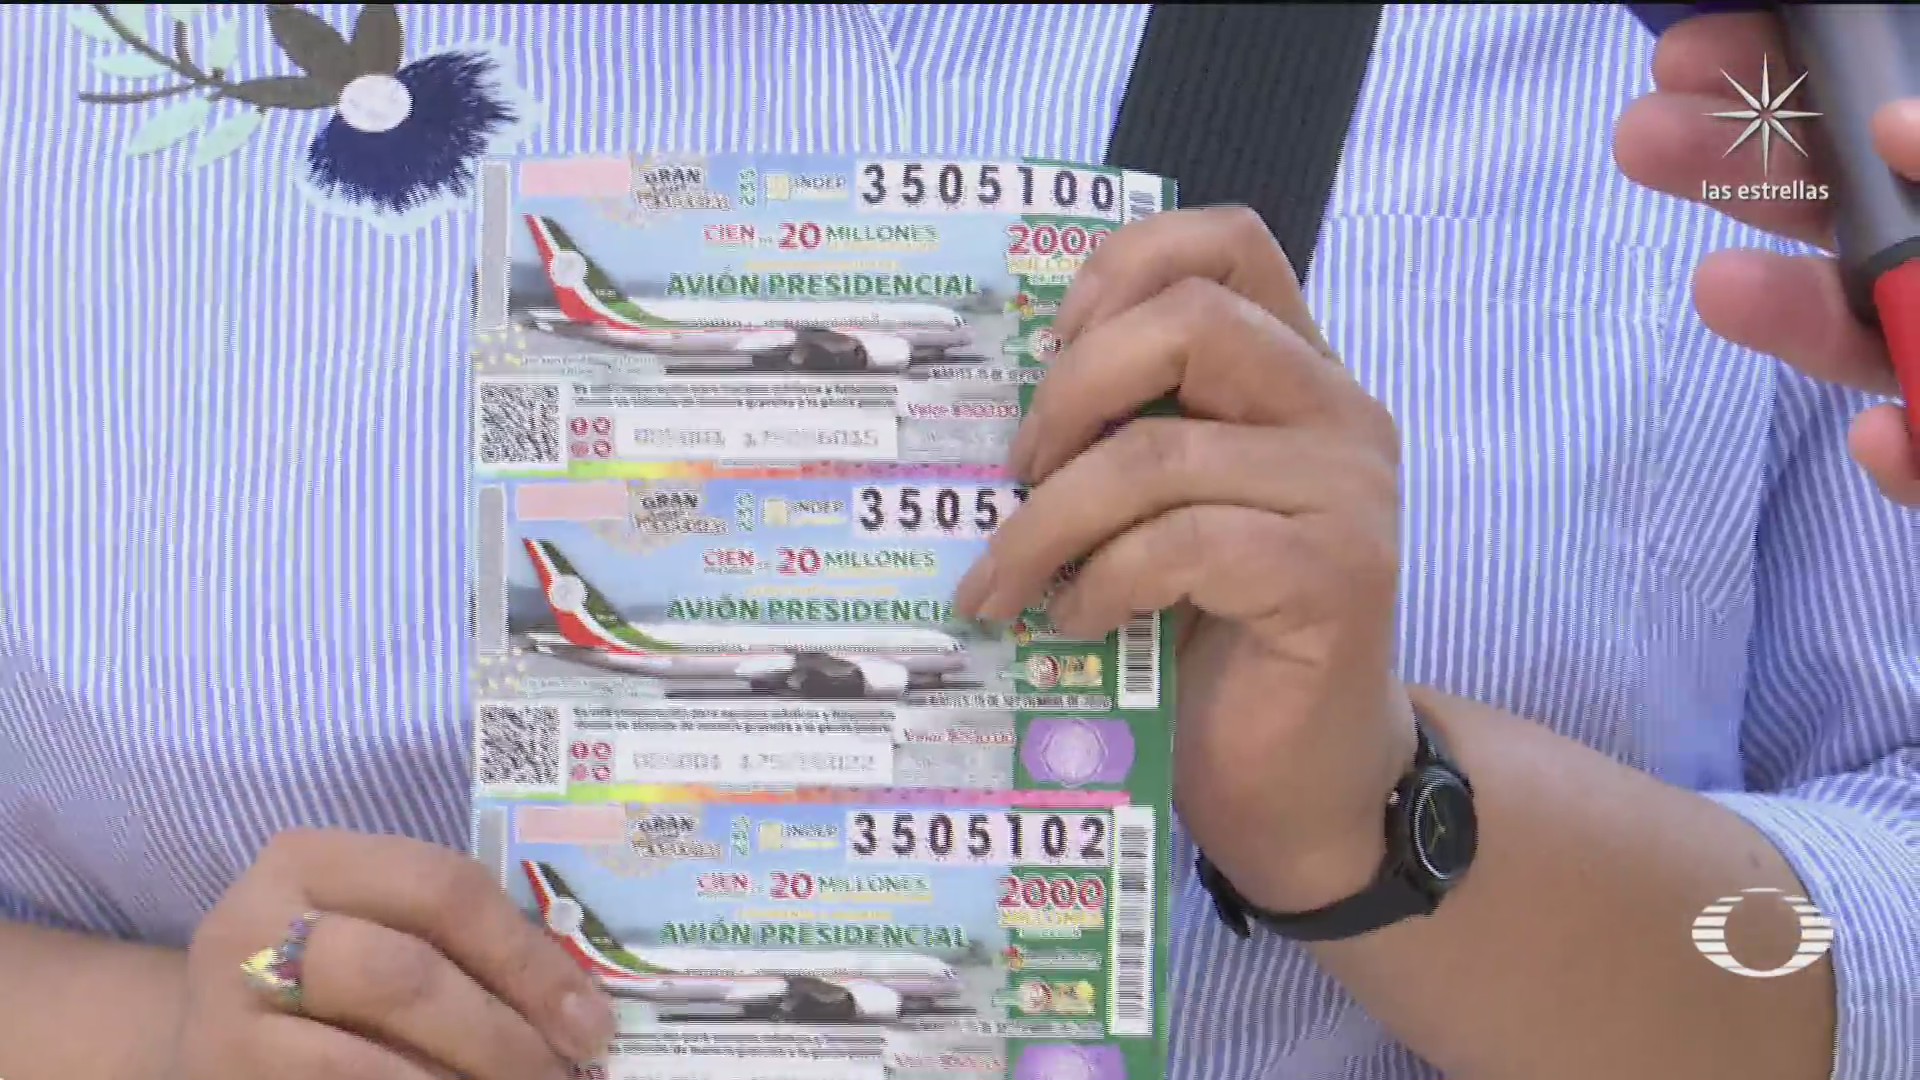 grupo armado desplaza a familias en chiapas por premio de la loteria del avion presidencial